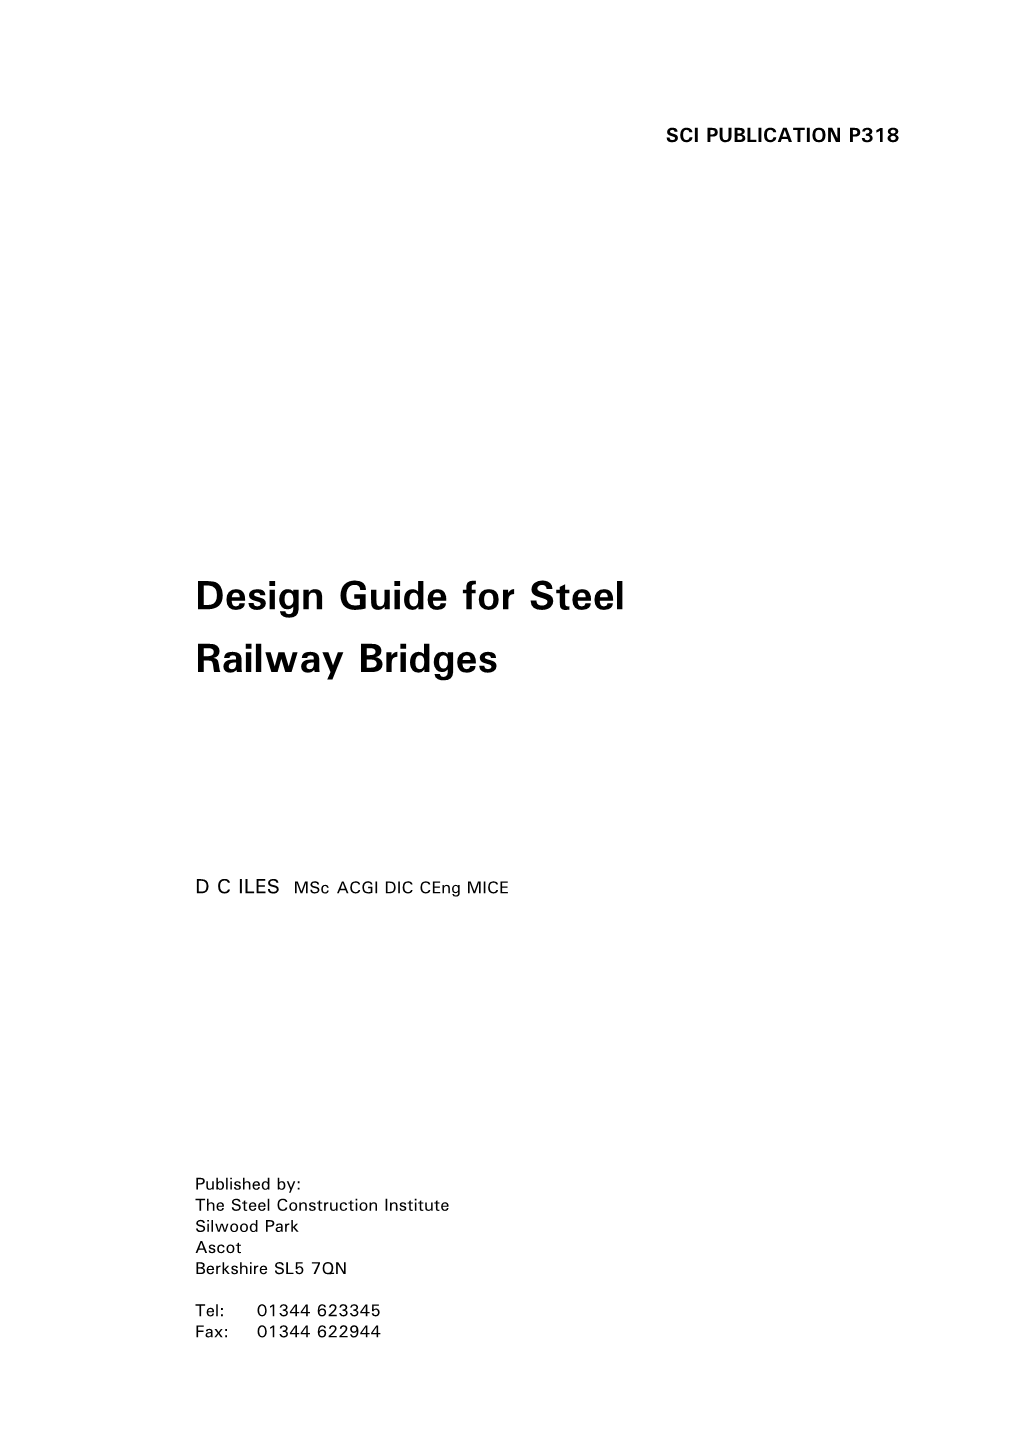 Design Guide for Steel Railway Bridges (P318)